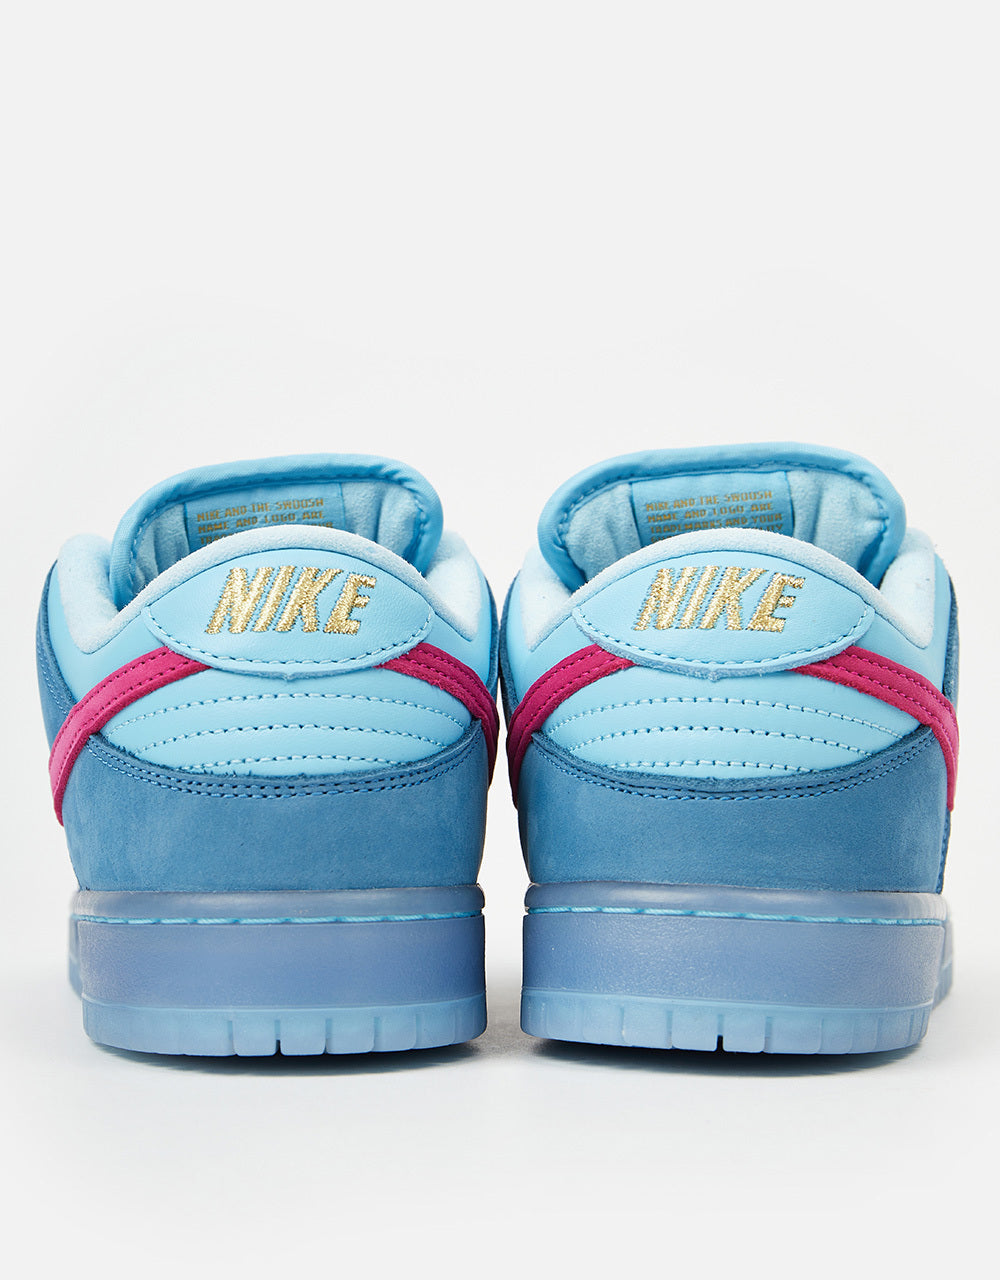 Nike SB 'Run the Jewels' Dunk Low Pro QS Skate Shoes - Deep Royal Blue